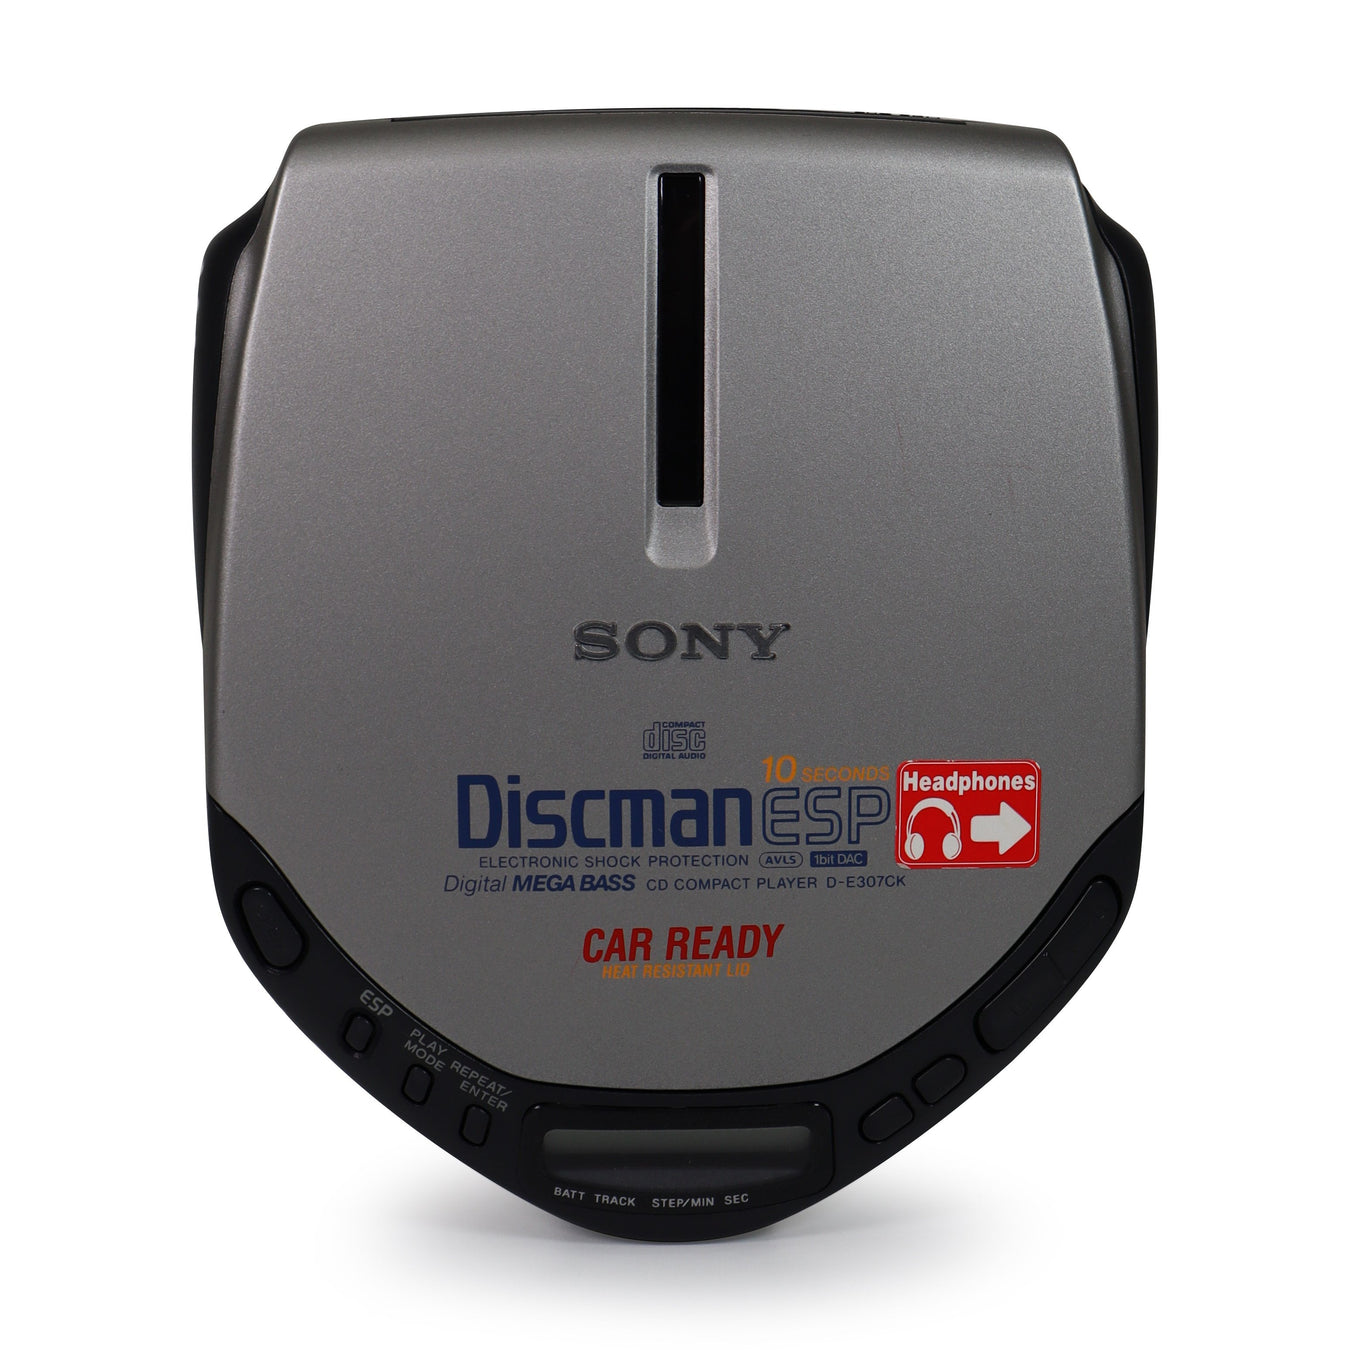 Portable compact disc cd player walkman discman ESP Sony electronic skip protection panasonic philips small playback